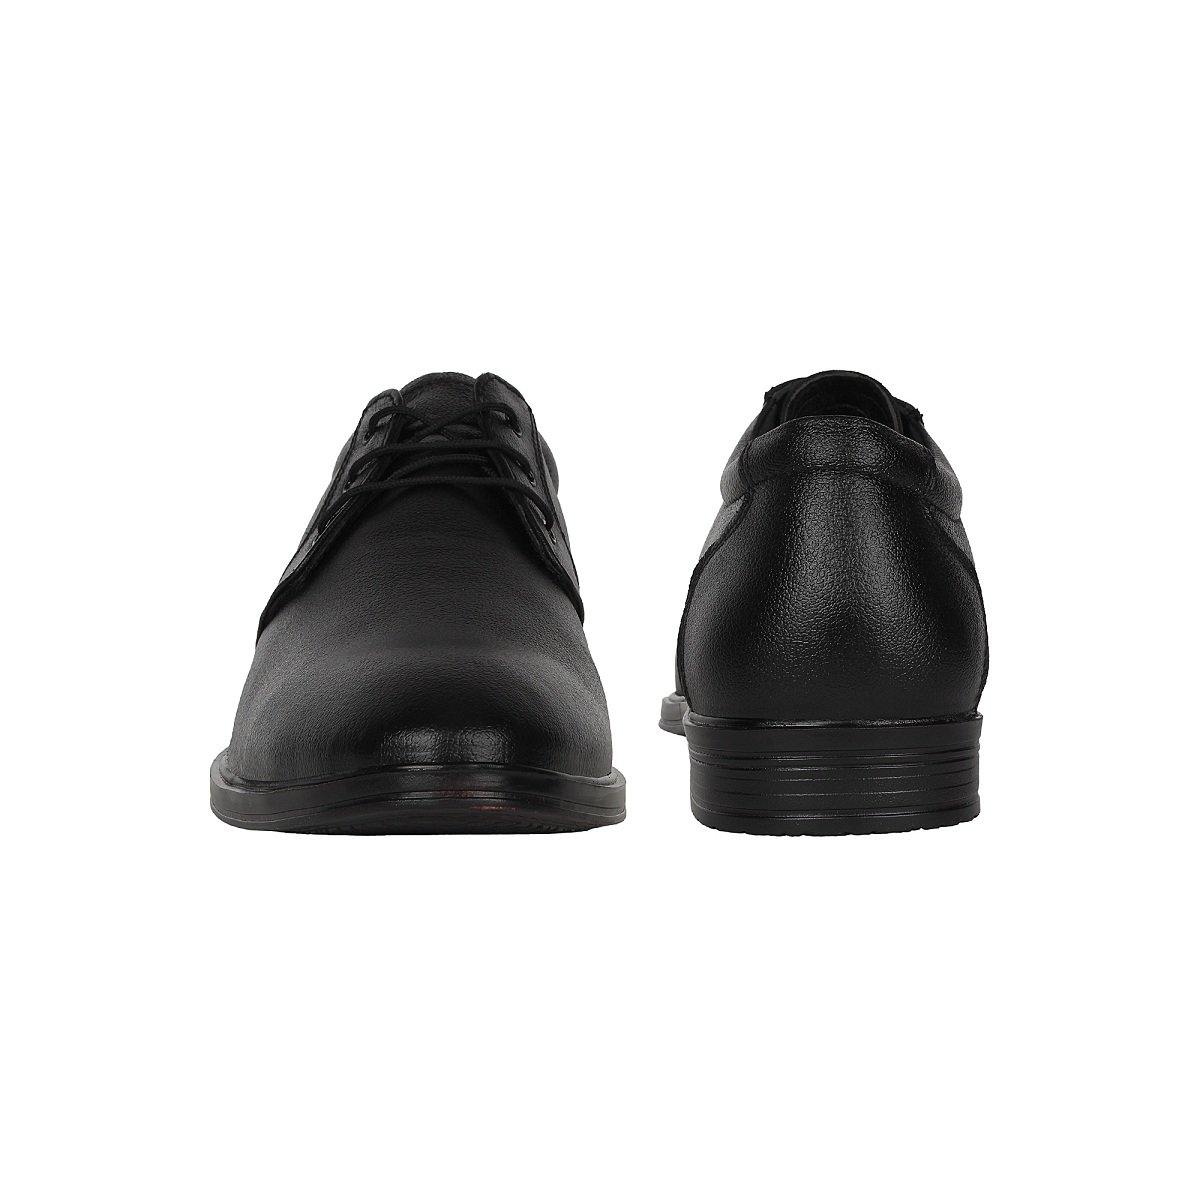 Black Formal Shoes for Men - Minor Defect - SeeandWear